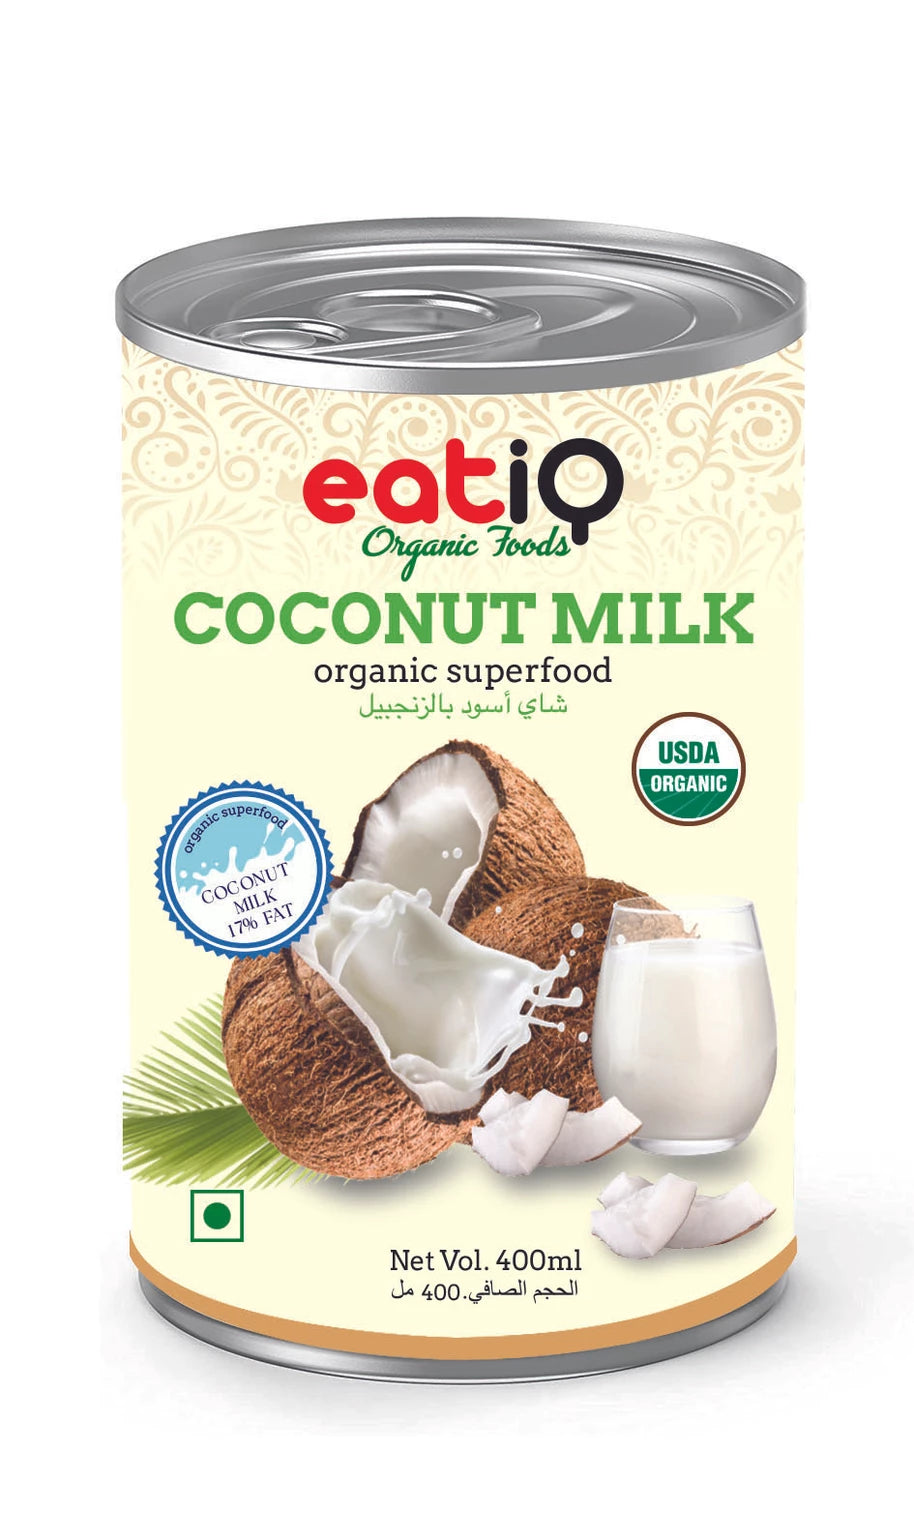 EATIQ ORGANIC FOODS Organic Coconut Milk 17% Fat, 400ml